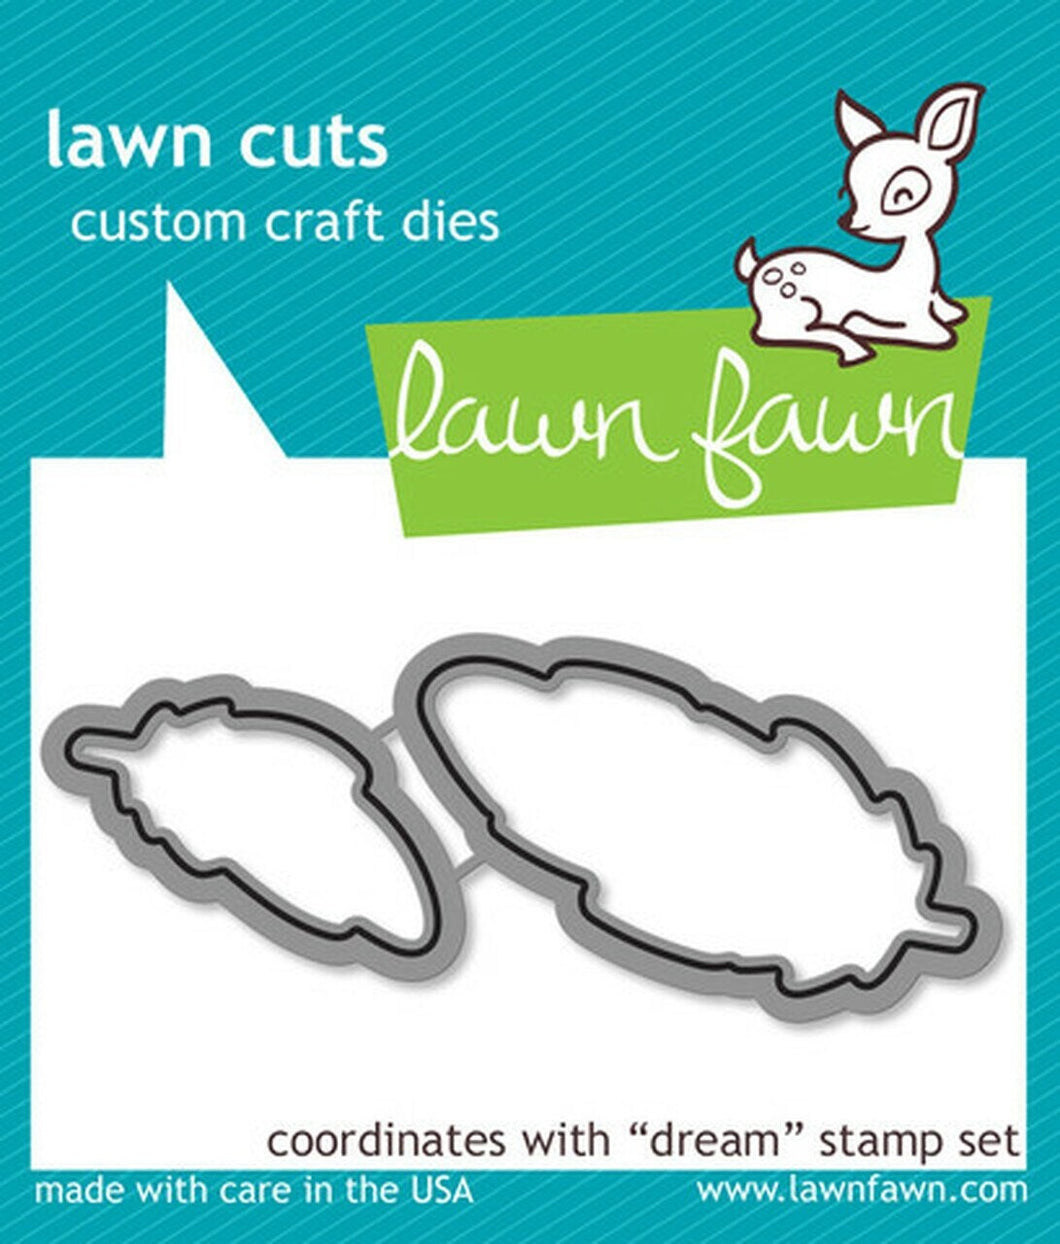 Lawn Fawn: Lawn Cuts Custom Craft Dies -dream die